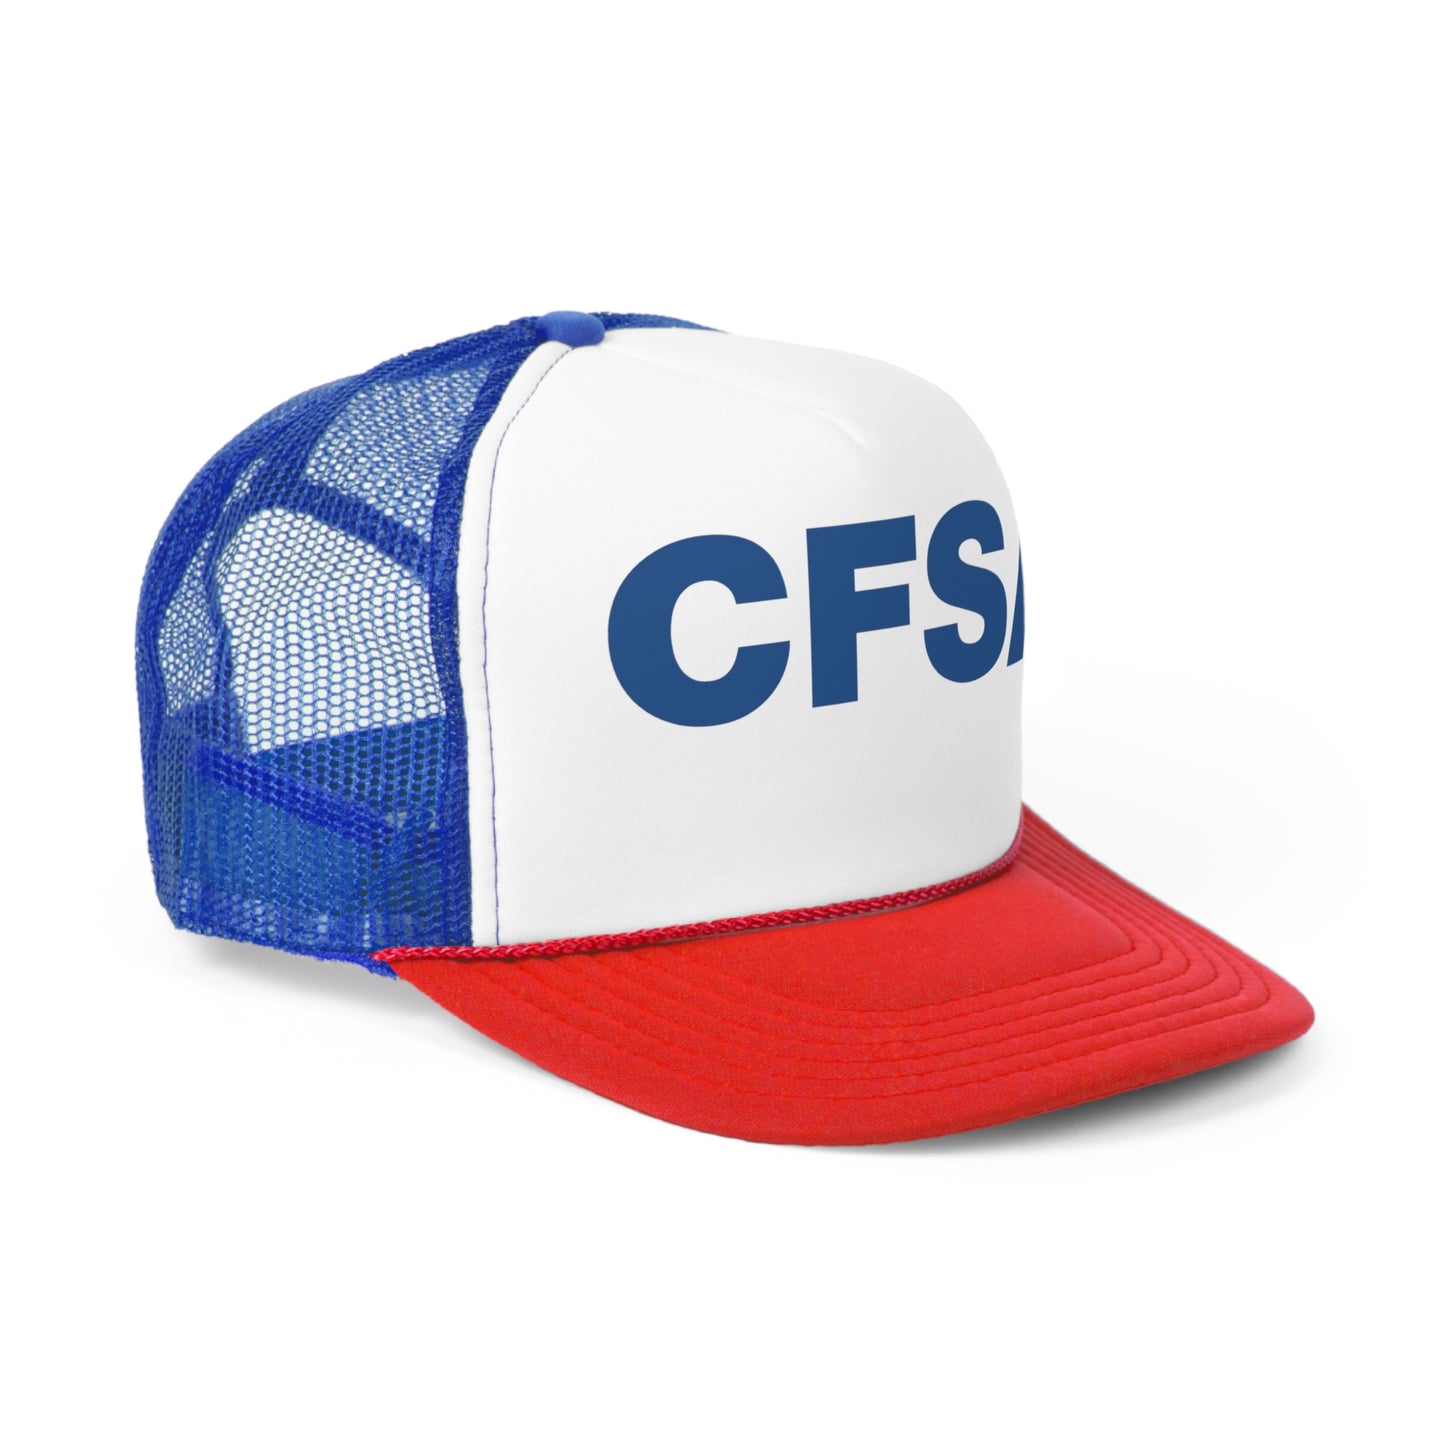 CFSA Trucker Caps